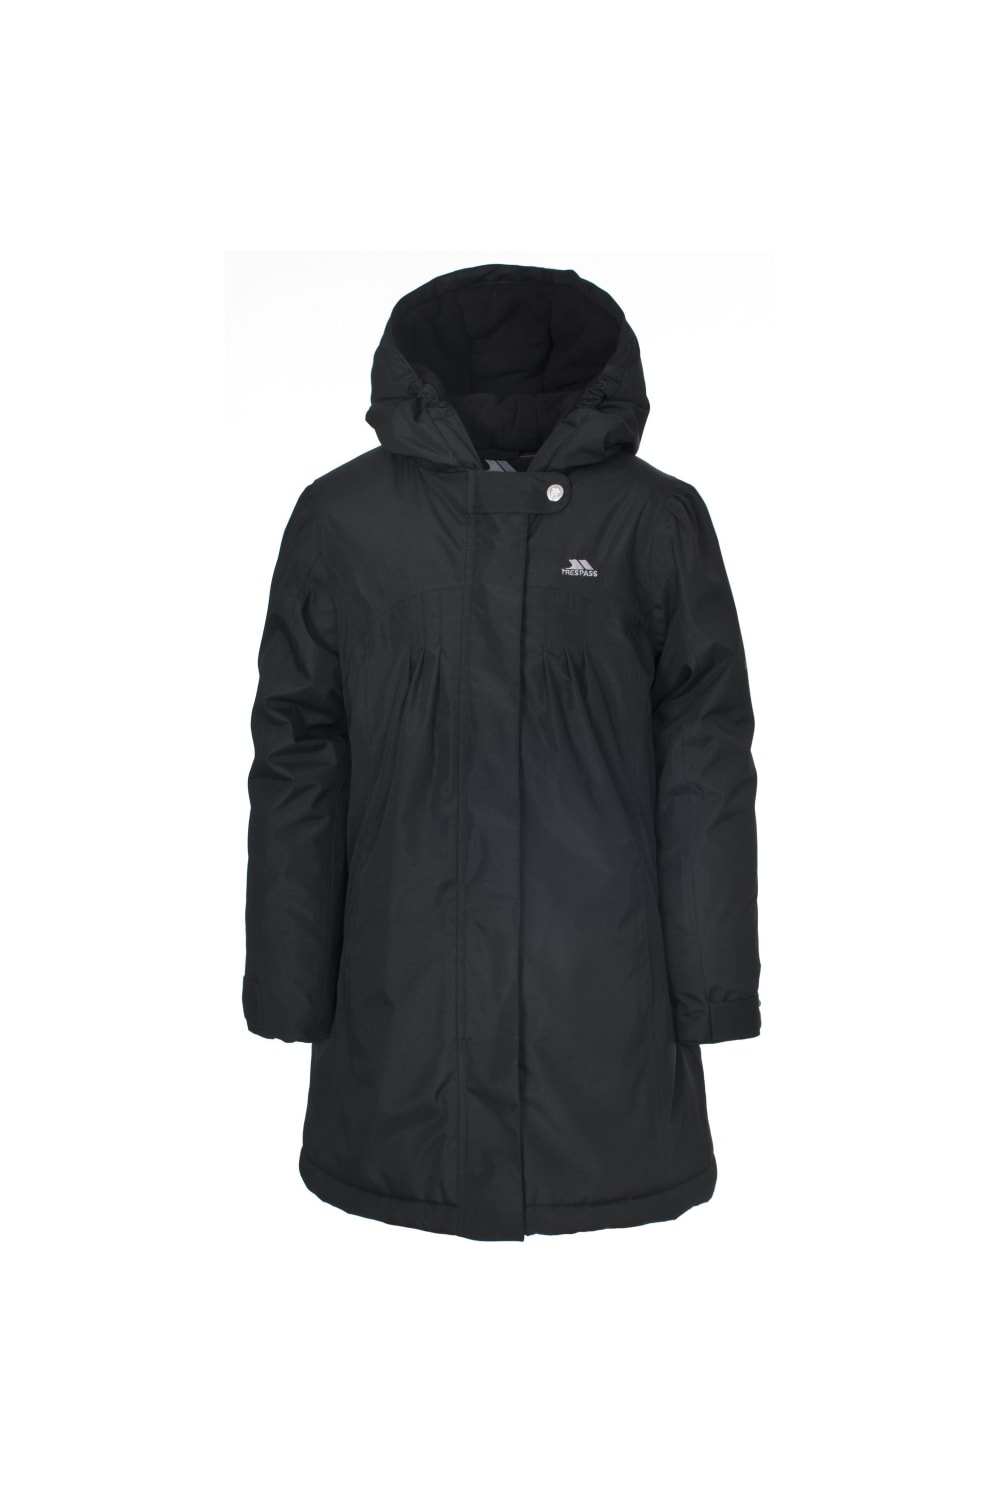 Trespass Childrens Girls Vee TP50 Waterproof Jacket (Black)